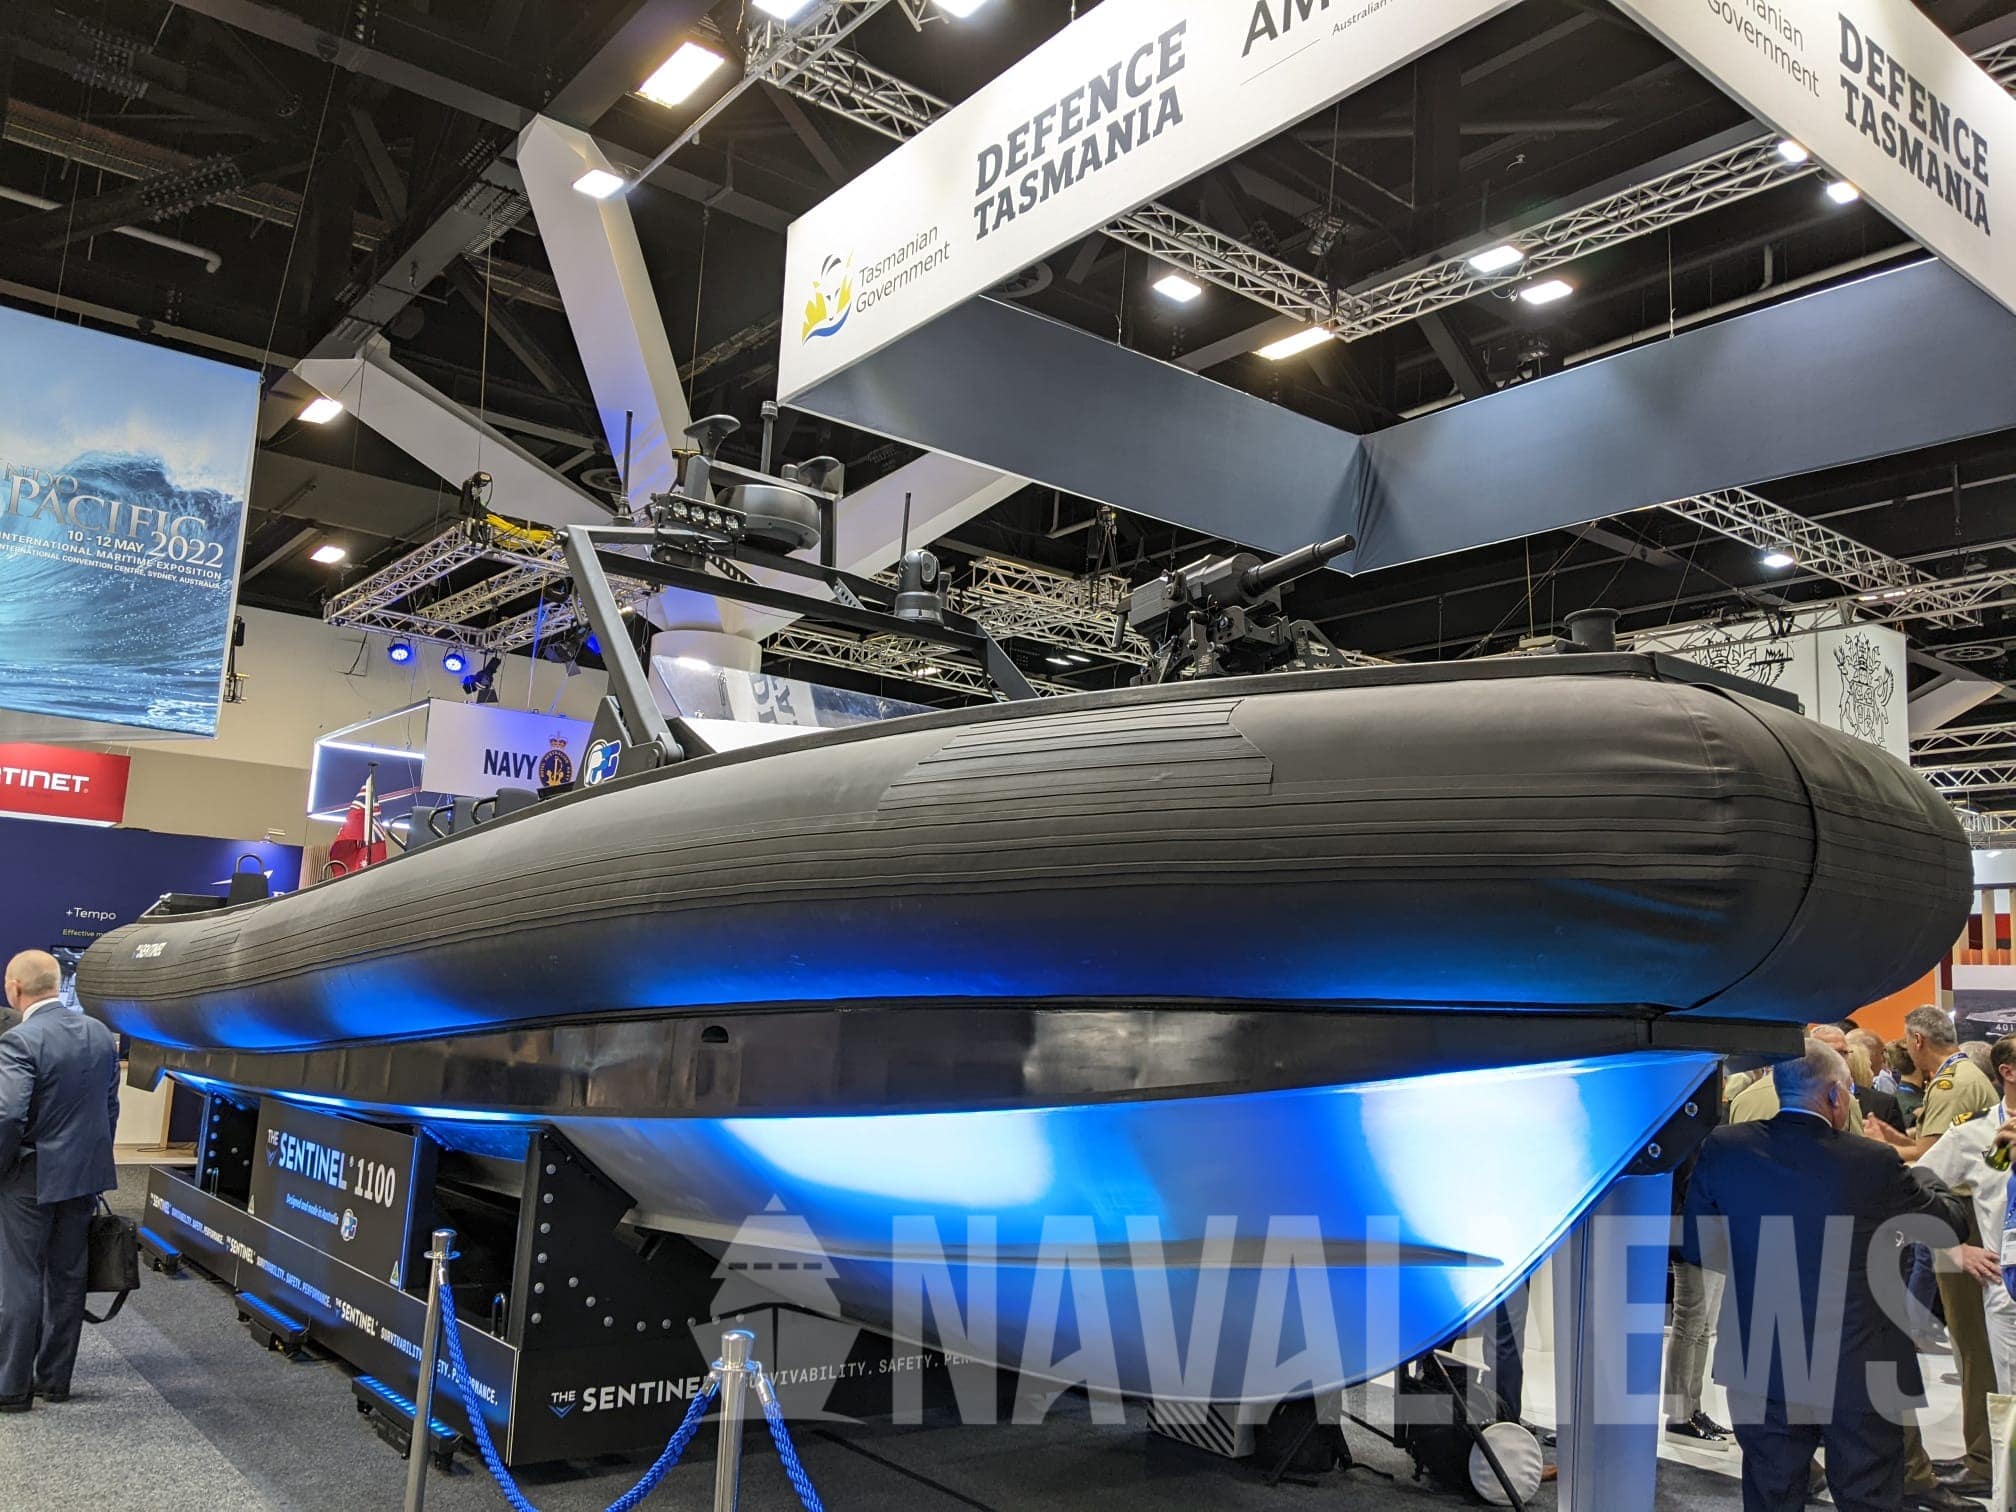 PFG unveils Sentinel 1100 watercraft at Indo Pacific 2022 - Naval News